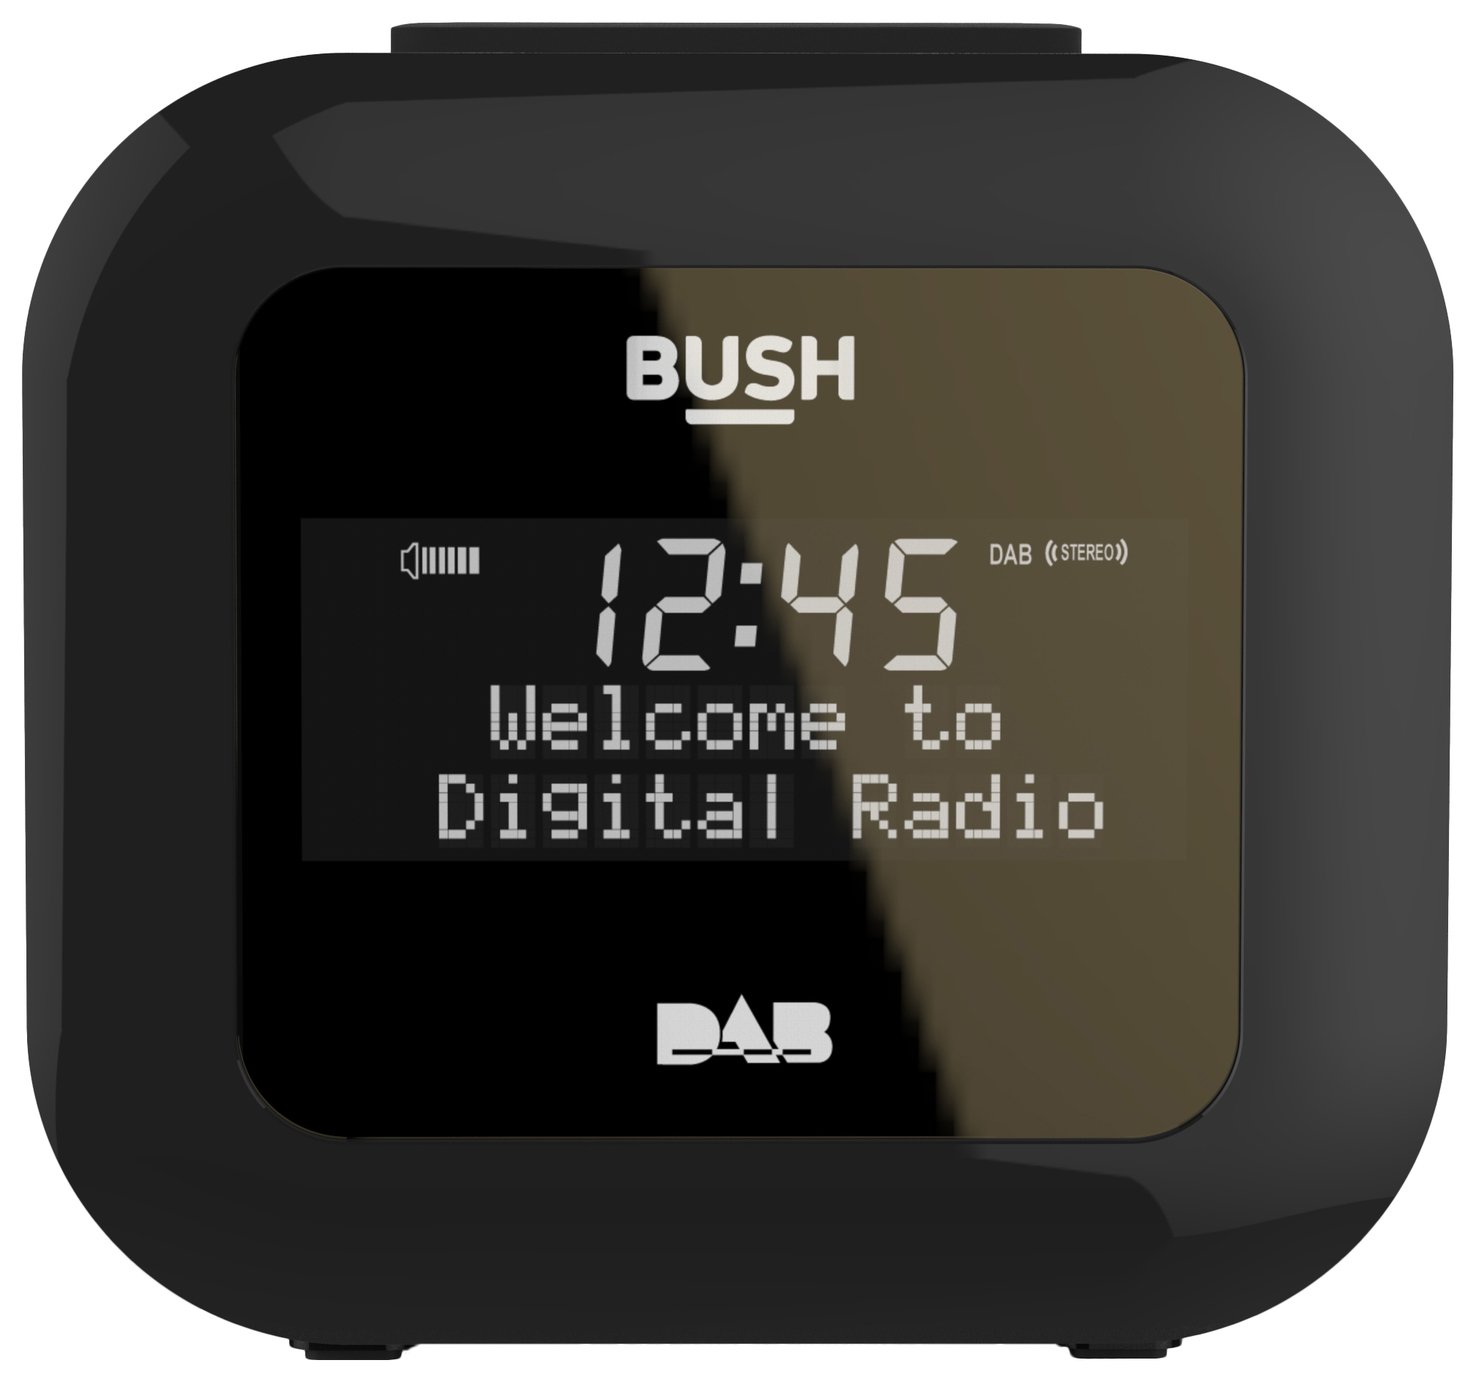 Bush USB DAB Clock Radio Review